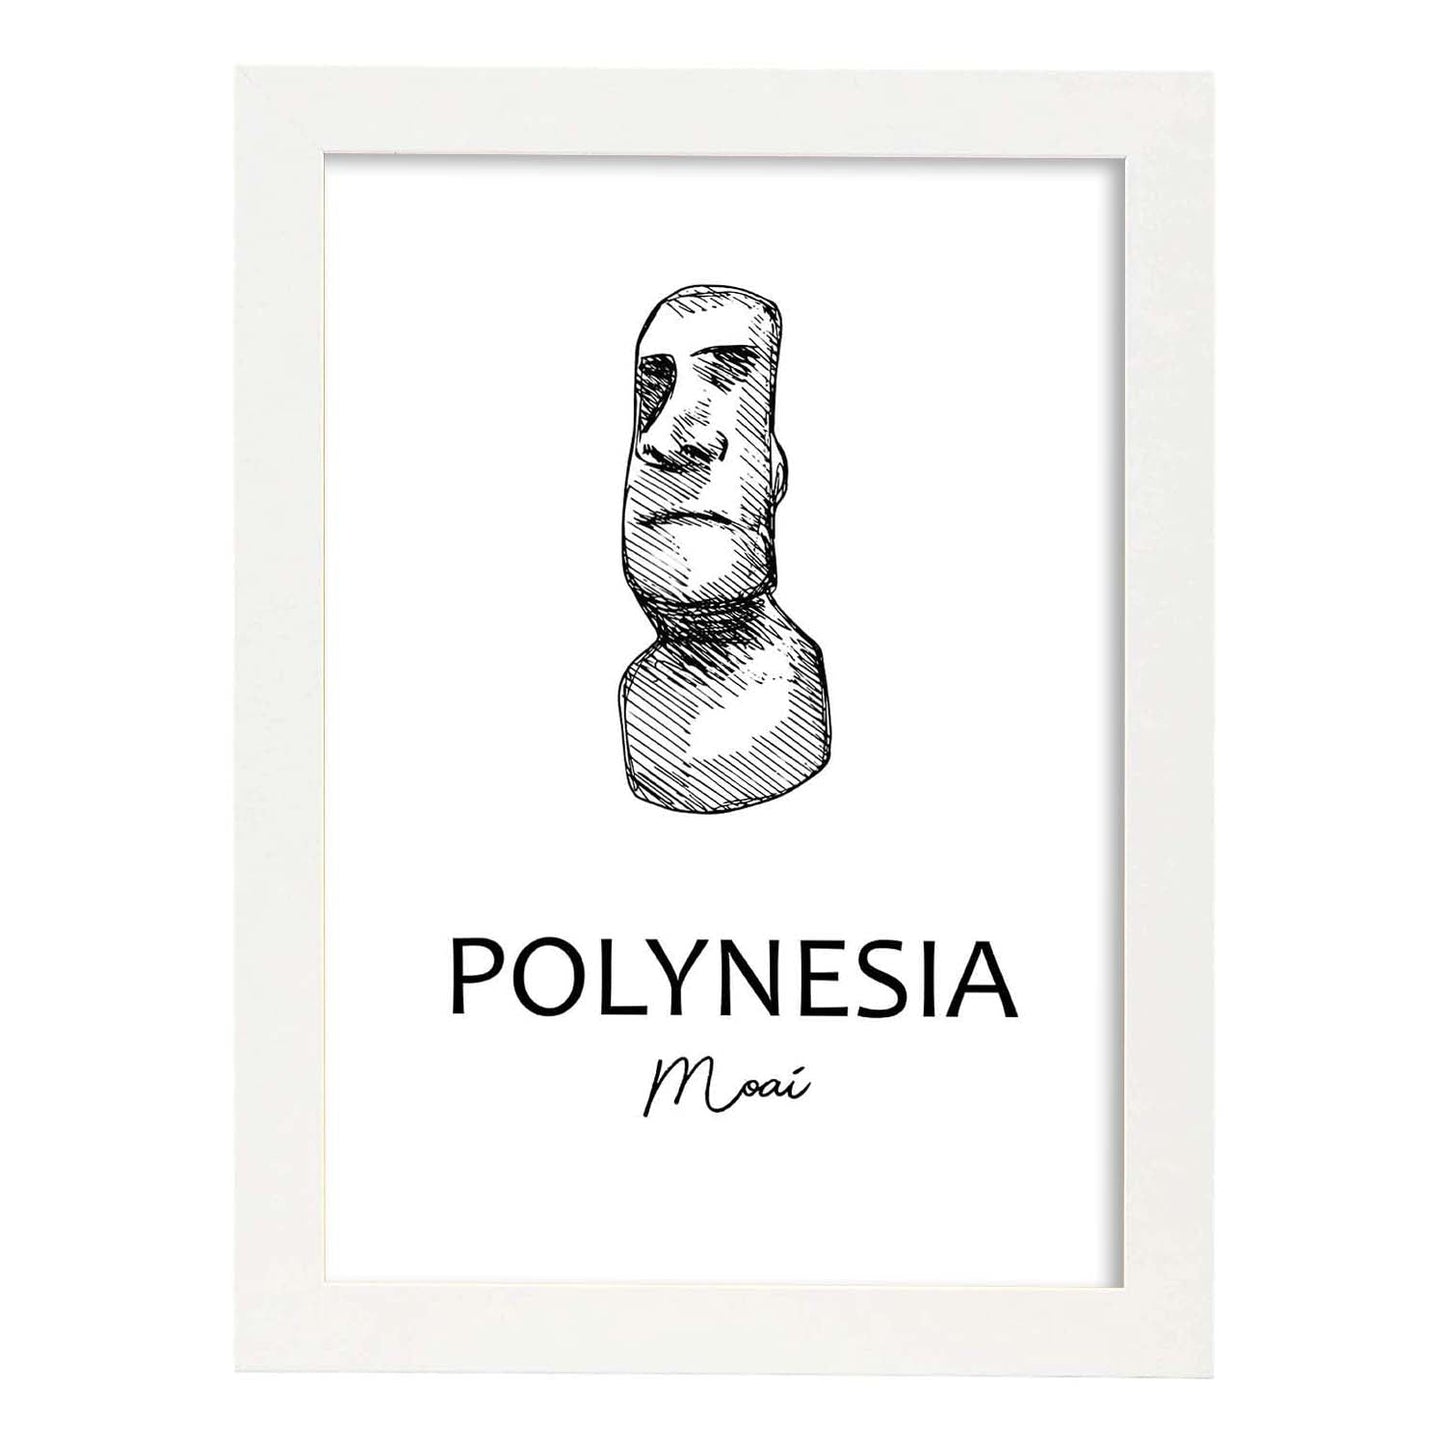 Poster de Polinesia - Moai. Láminas con monumentos de ciudades.-Artwork-Nacnic-A3-Marco Blanco-Nacnic Estudio SL